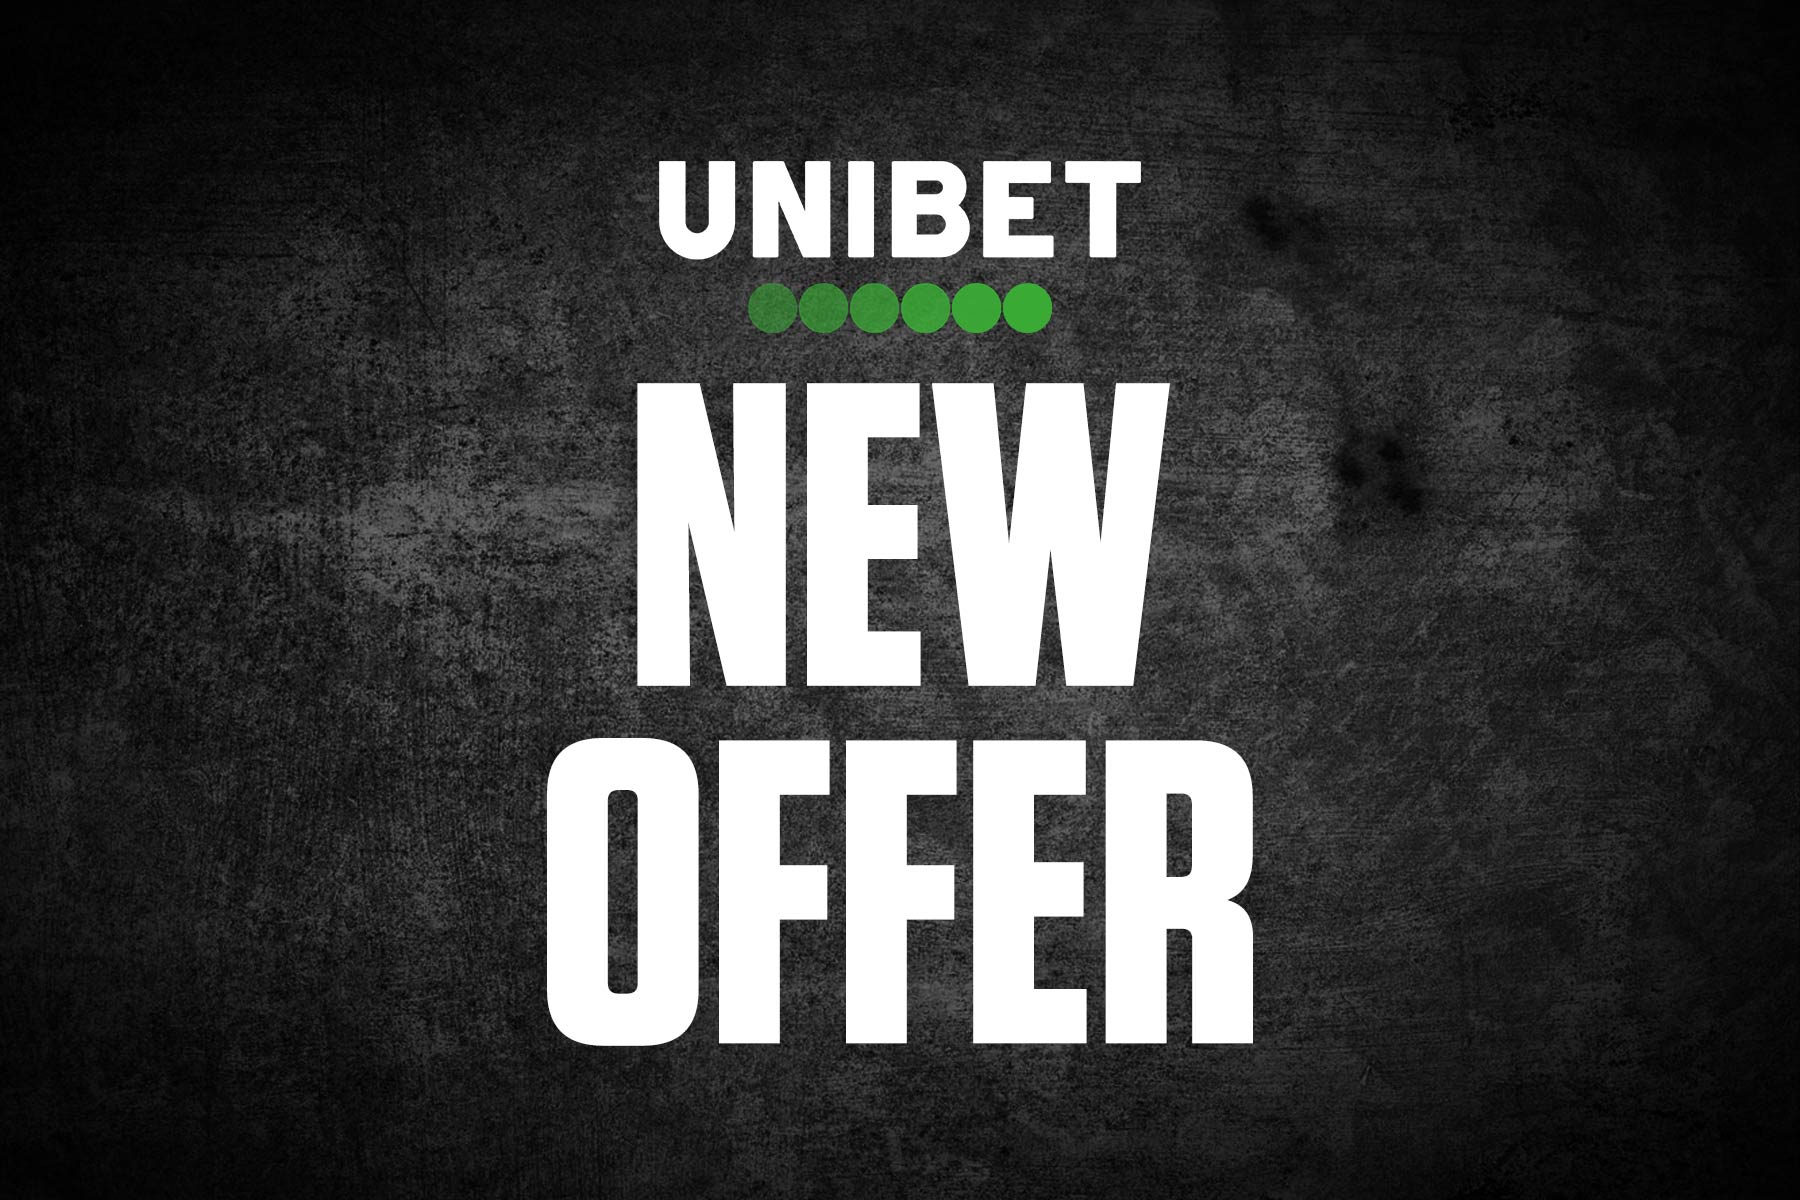 unibet new customer offer